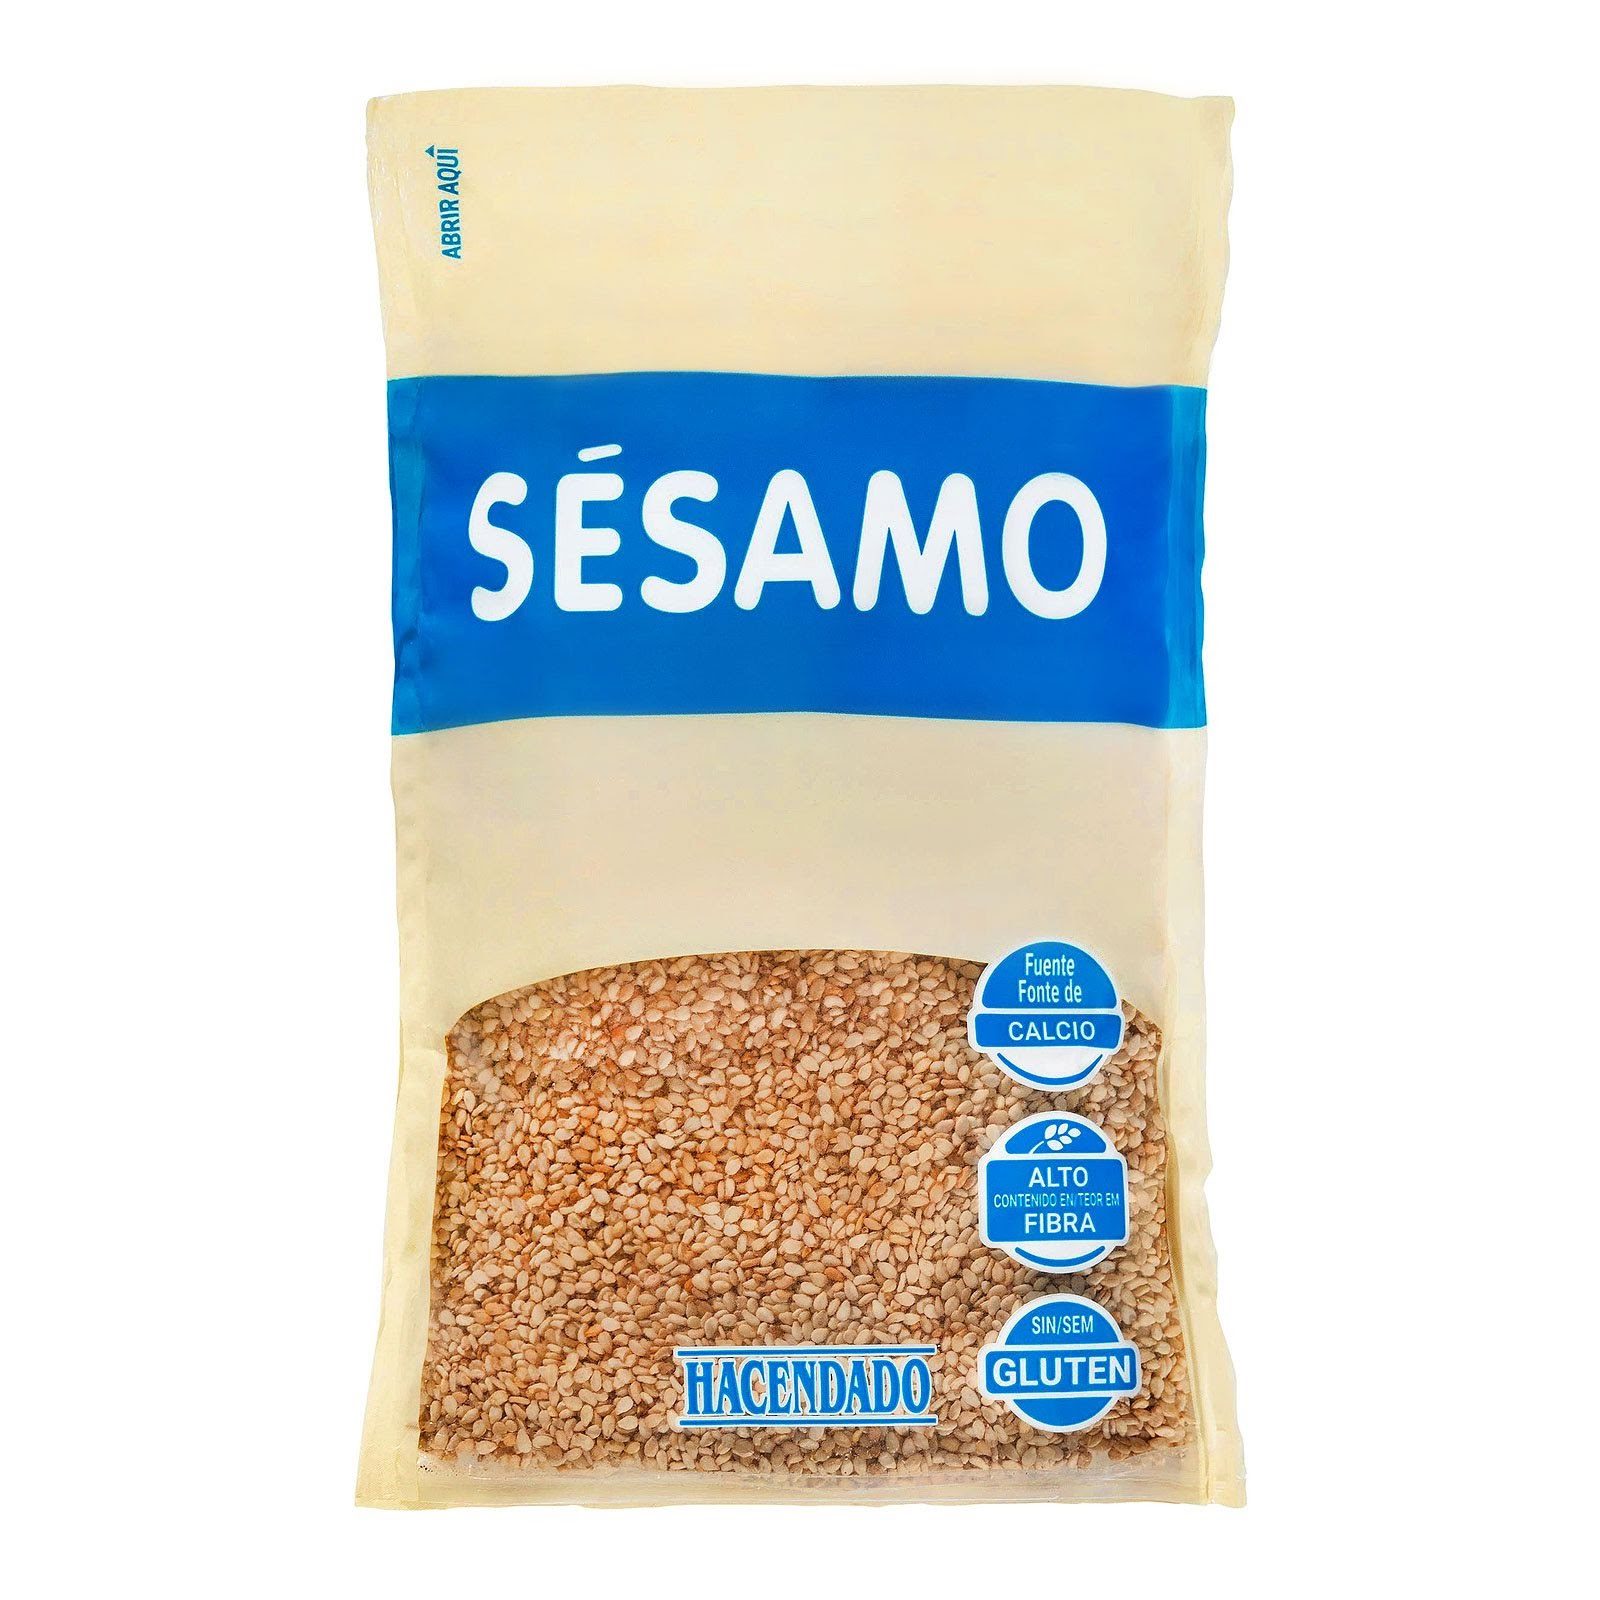 semillas-de-sesamo-tostado-hacendado-mercadona-1-7381790